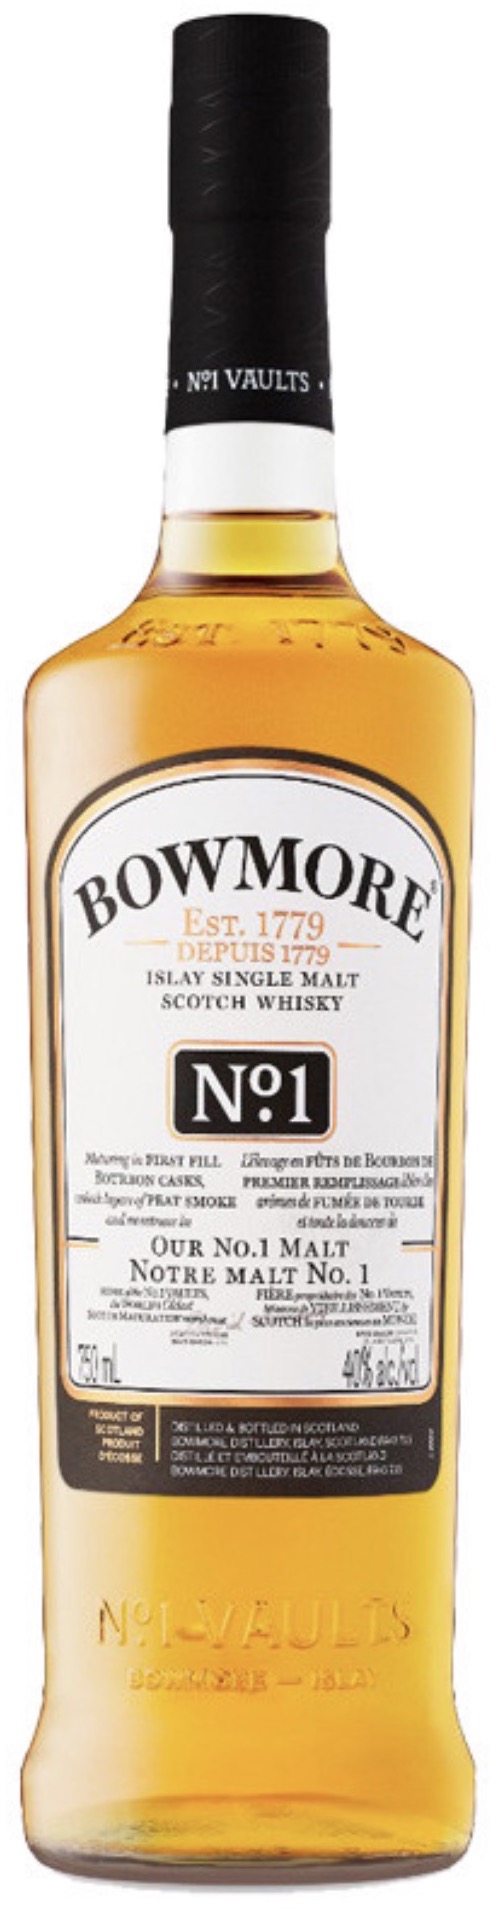 Bowmore No. 1 Islay Single Malt Scotch Whisky GP 40 % vol. 0,7L